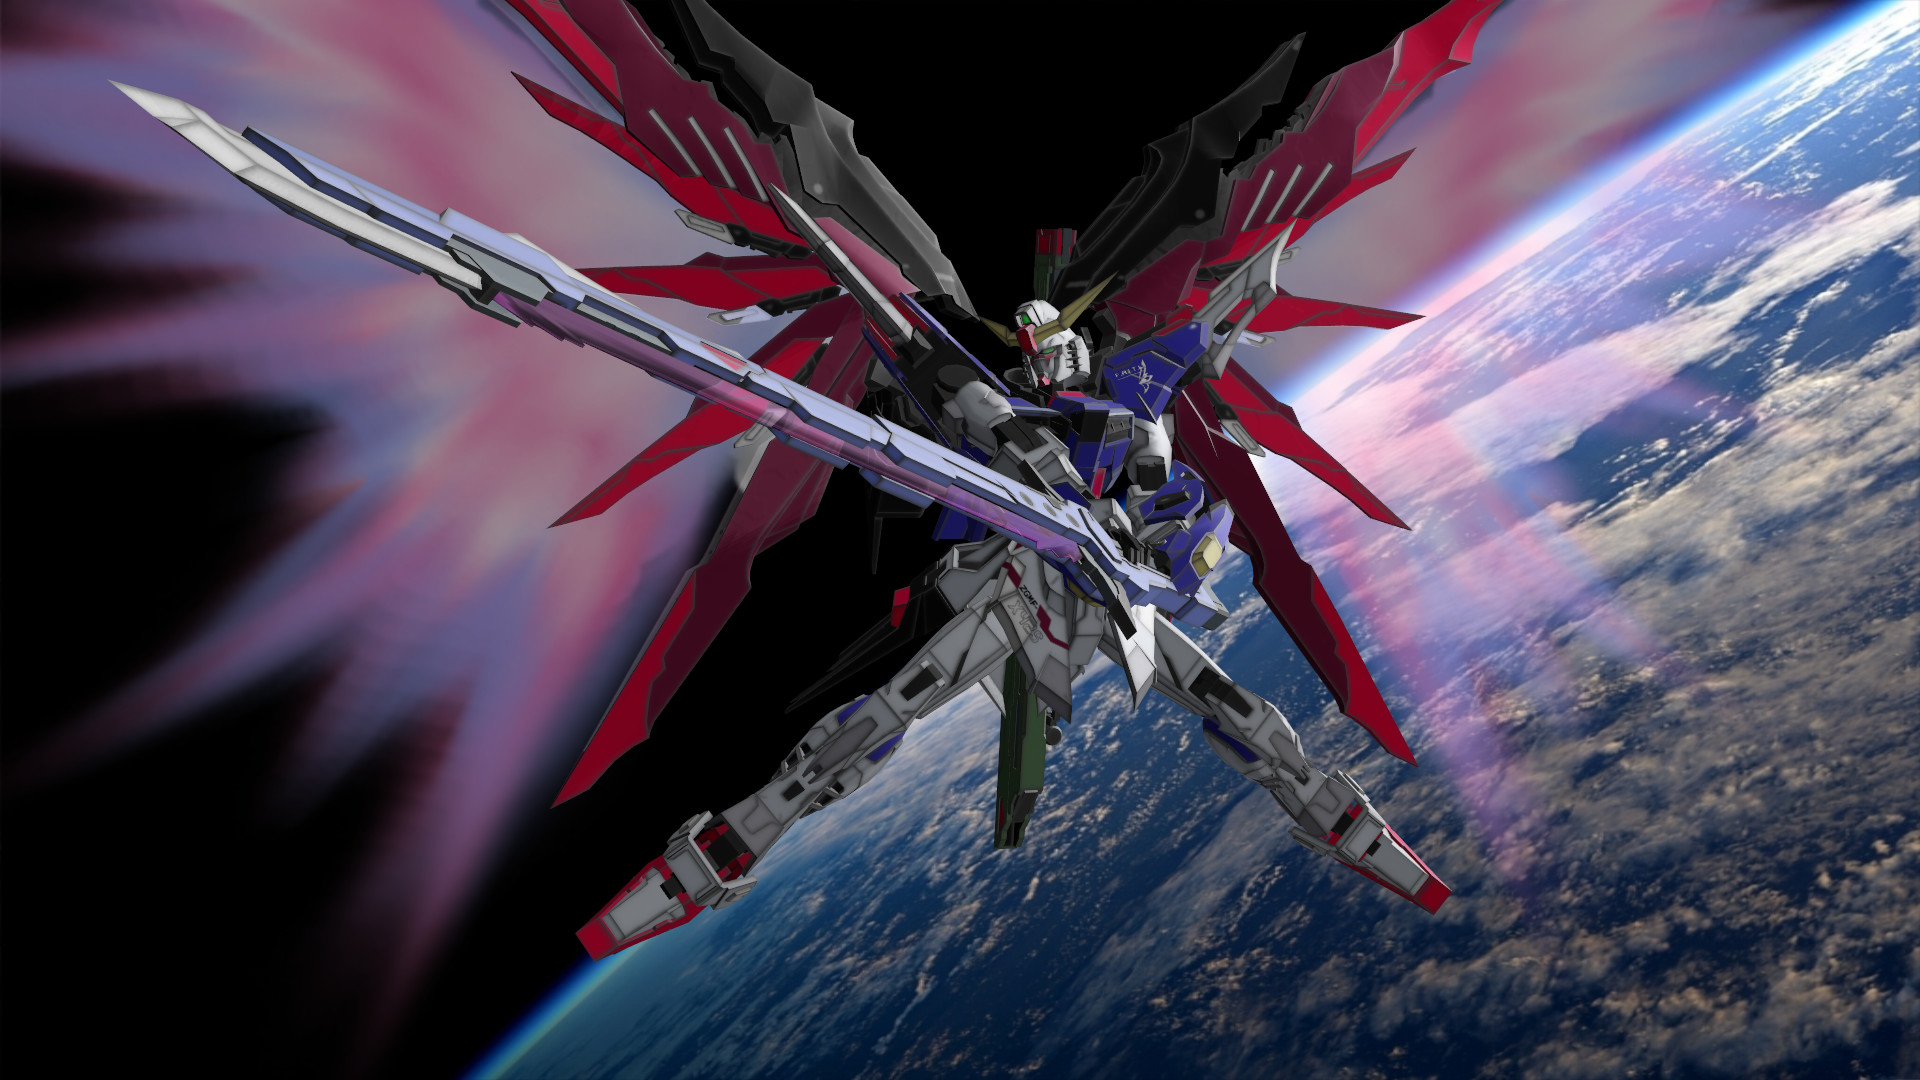 1920x1080 Freedom Gundam Hd Wallpaper : Destiny gundam wallpaper free download cerc ug